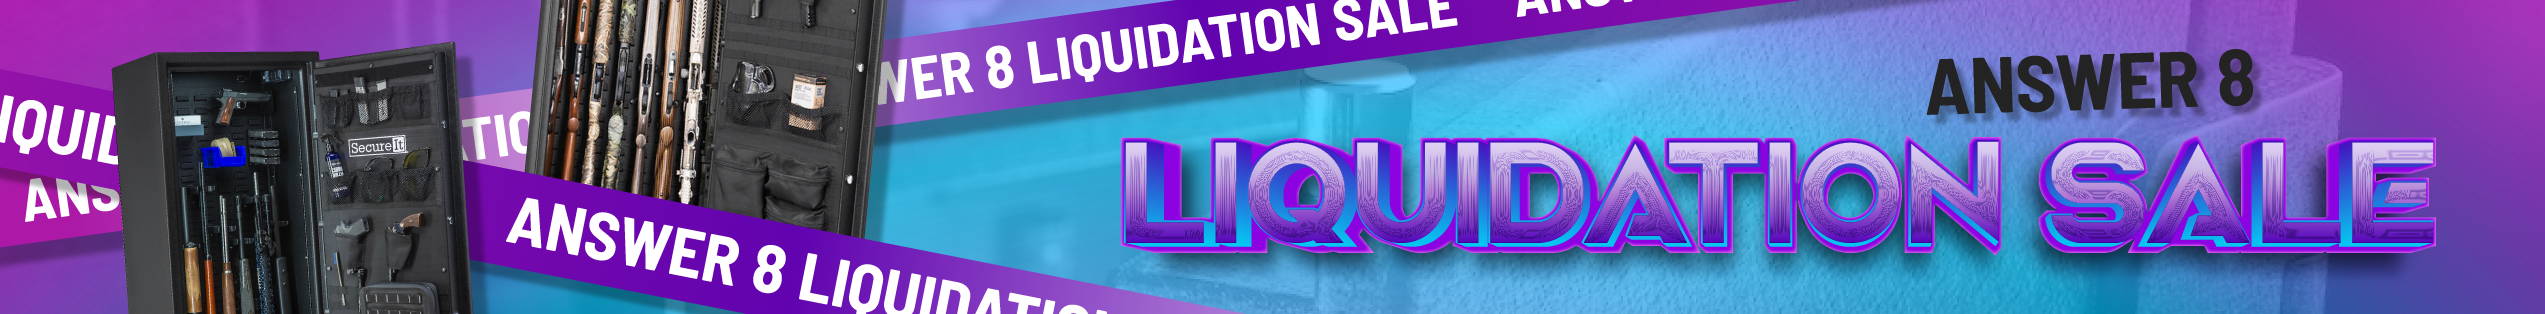 SecureIt Model 8 Liquidation Sale